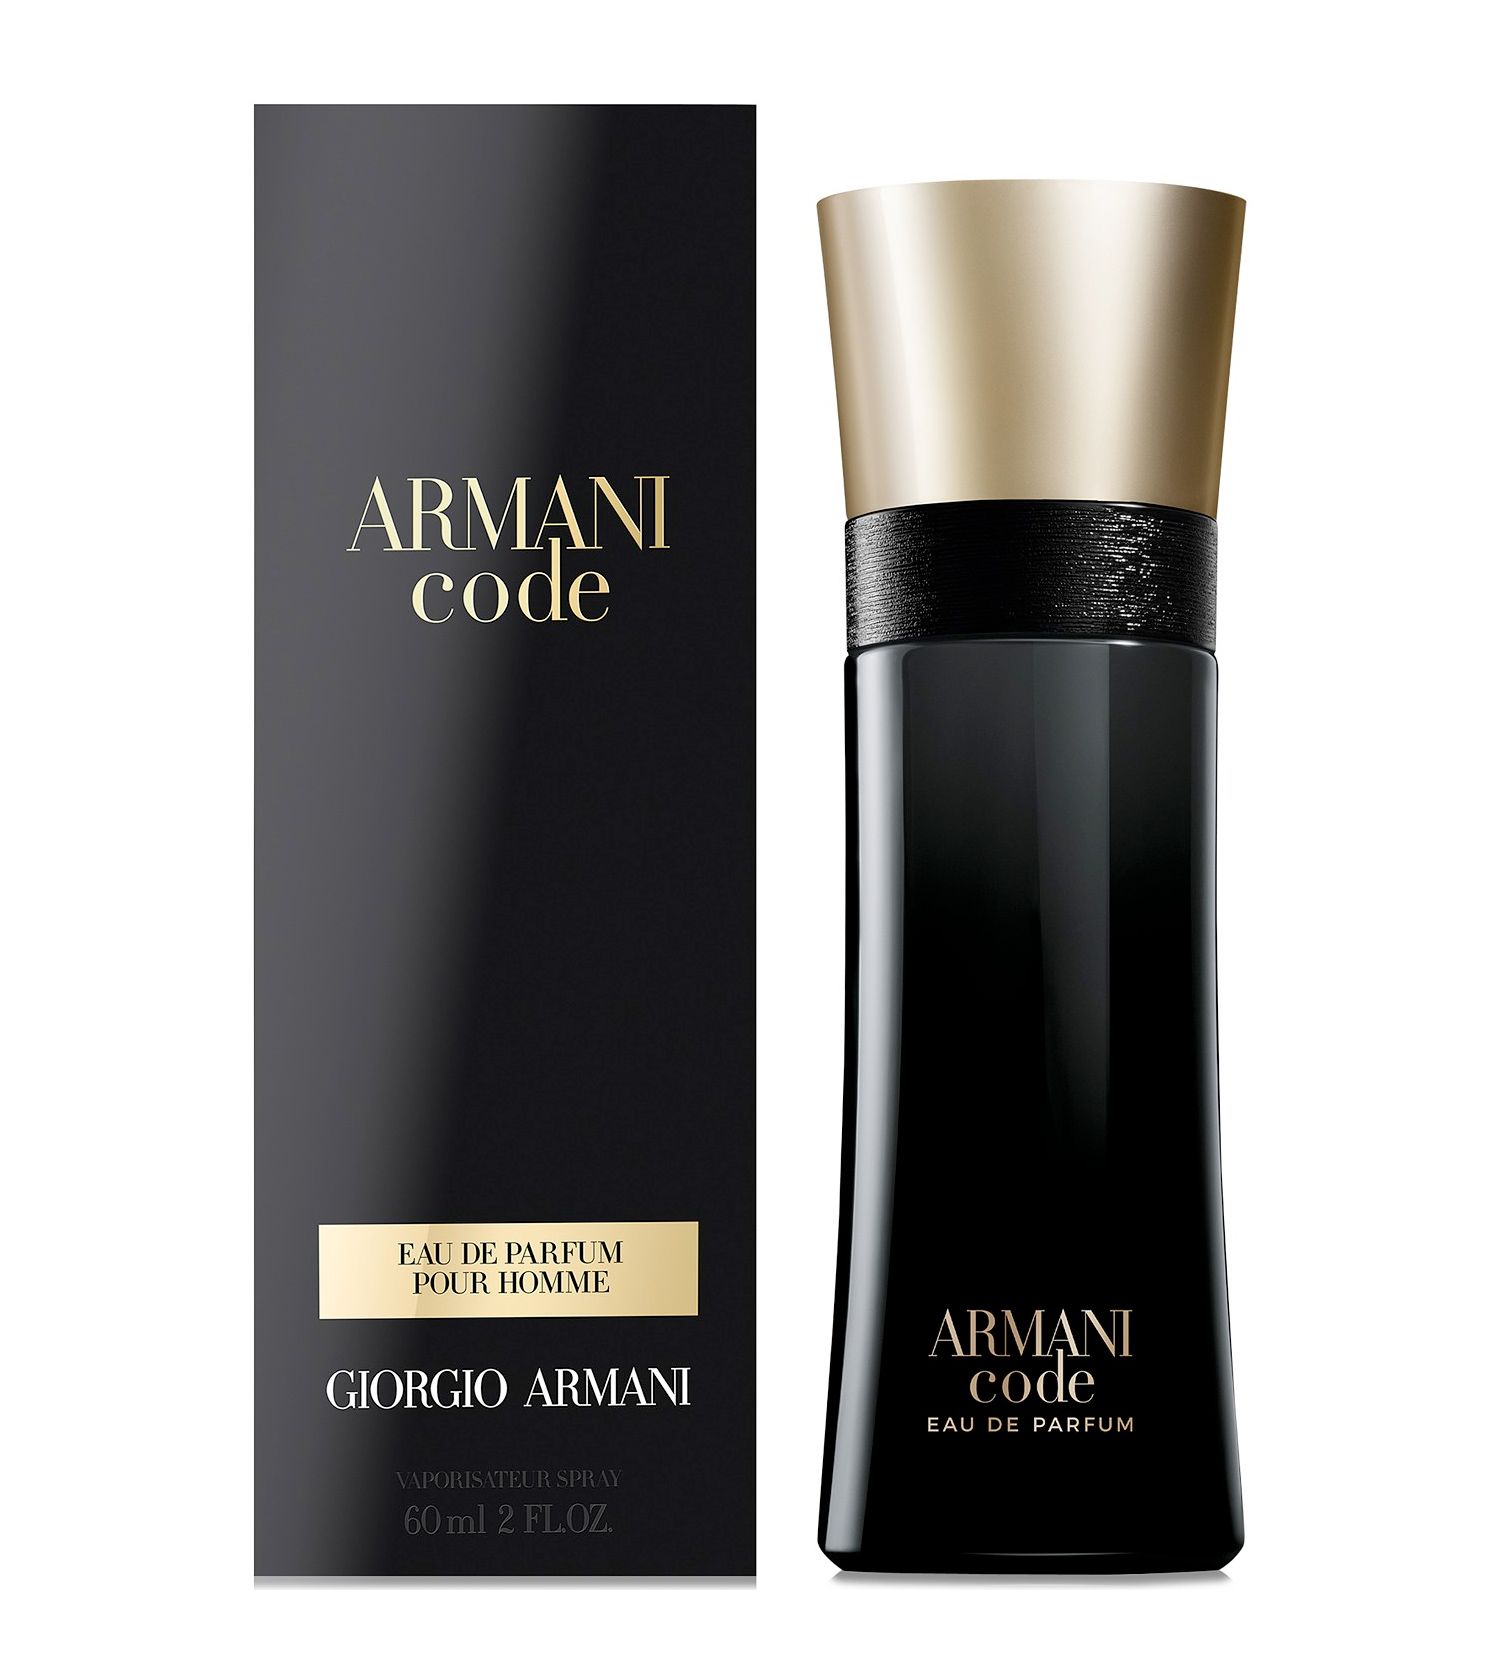 Armani Code Eau de Parfum by Giorgio Armani Cologne